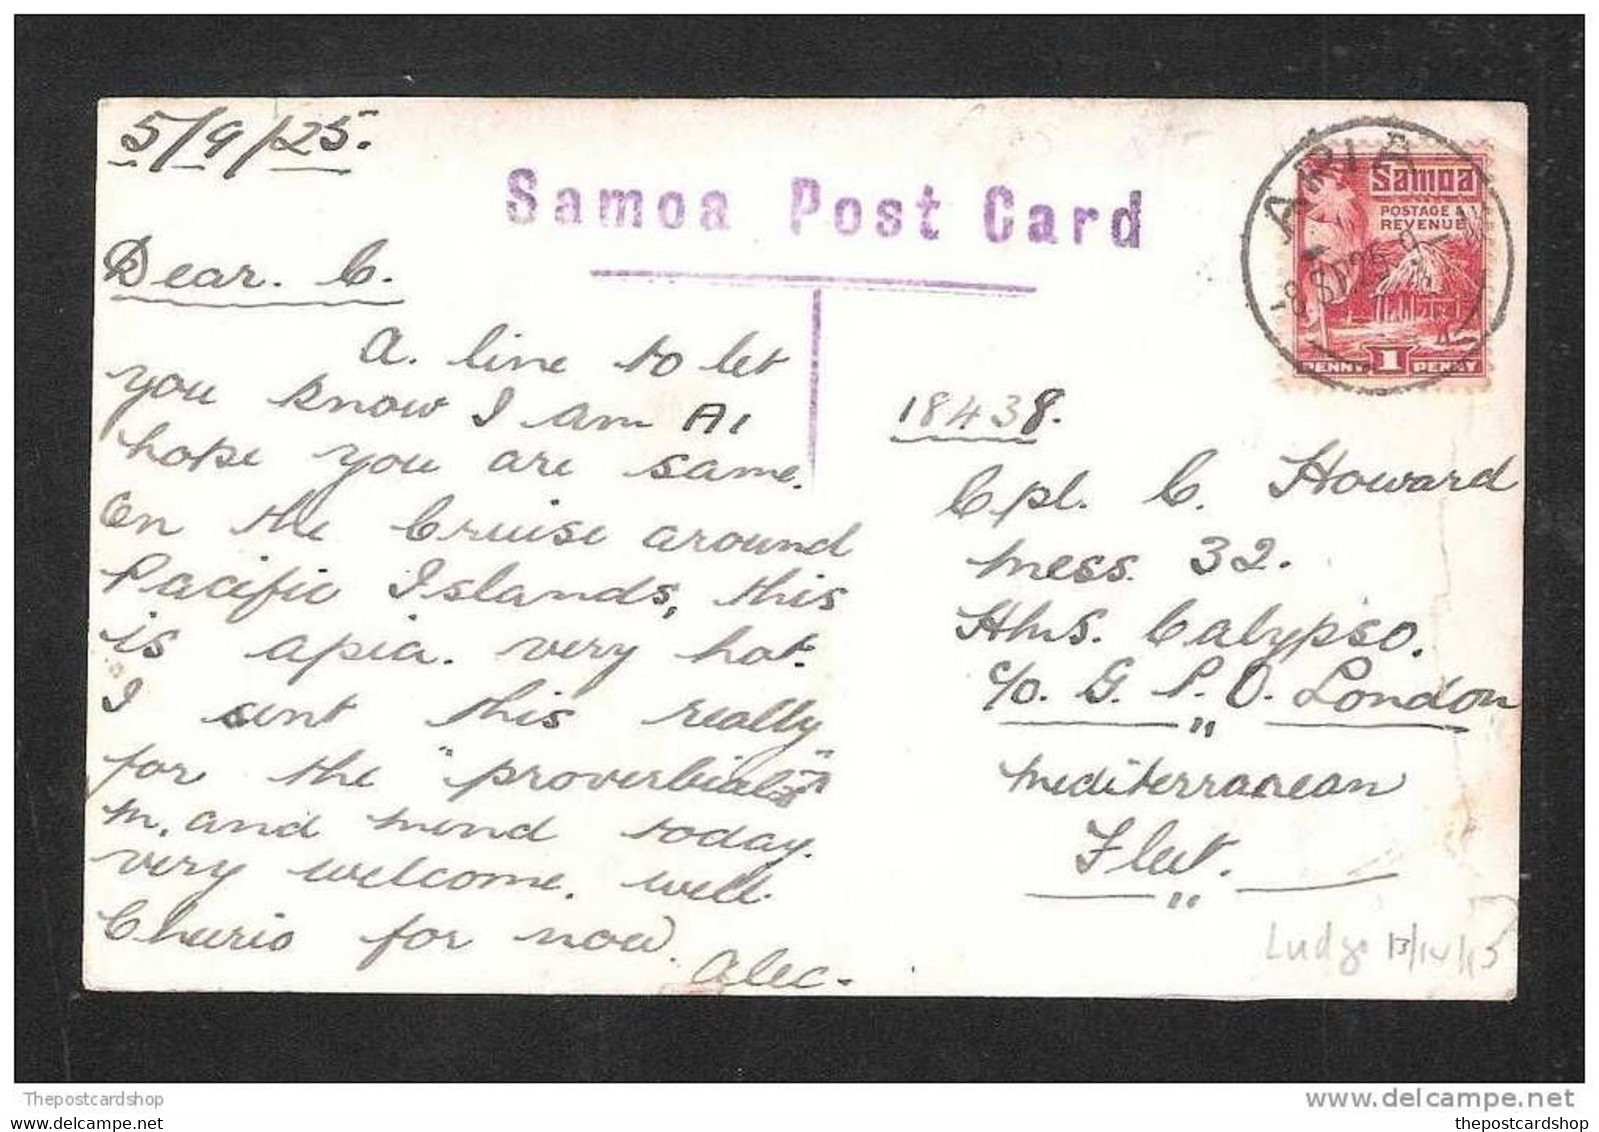 CPA RP APIA MILITARY NAVAL WAR MEMORIAL SAMOA POSTALLY USED 1925 AT APIA STAMP ATTACHED TO HMS CALYPSO - Samoa